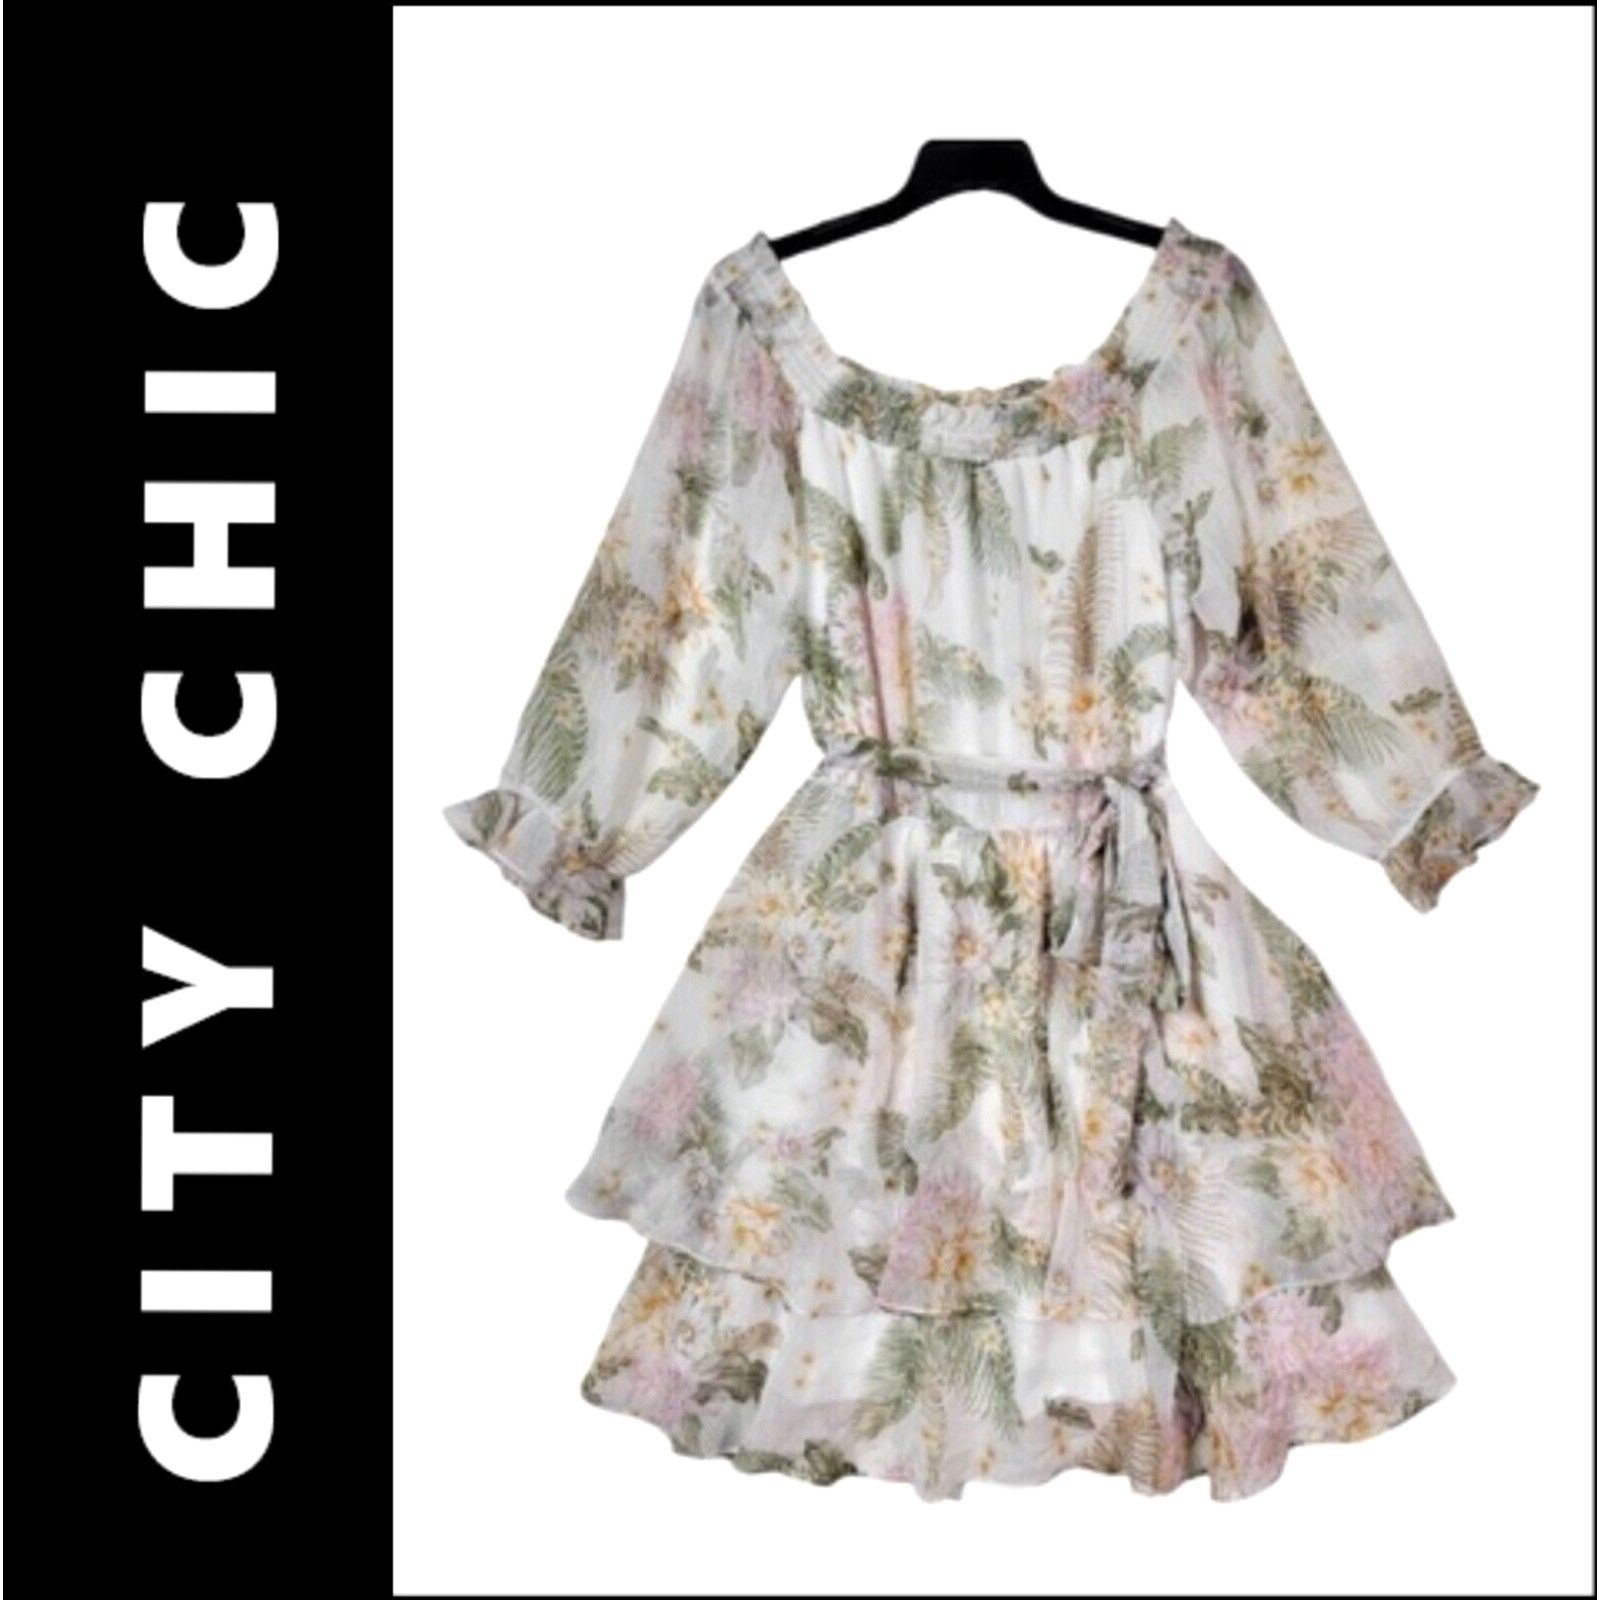 Vintage City Chic Boho Dress Size Large Women Fit & Flare Long Sleeve Floral Layer Belt Size L / US 10 / IT 46 - 1 Preview